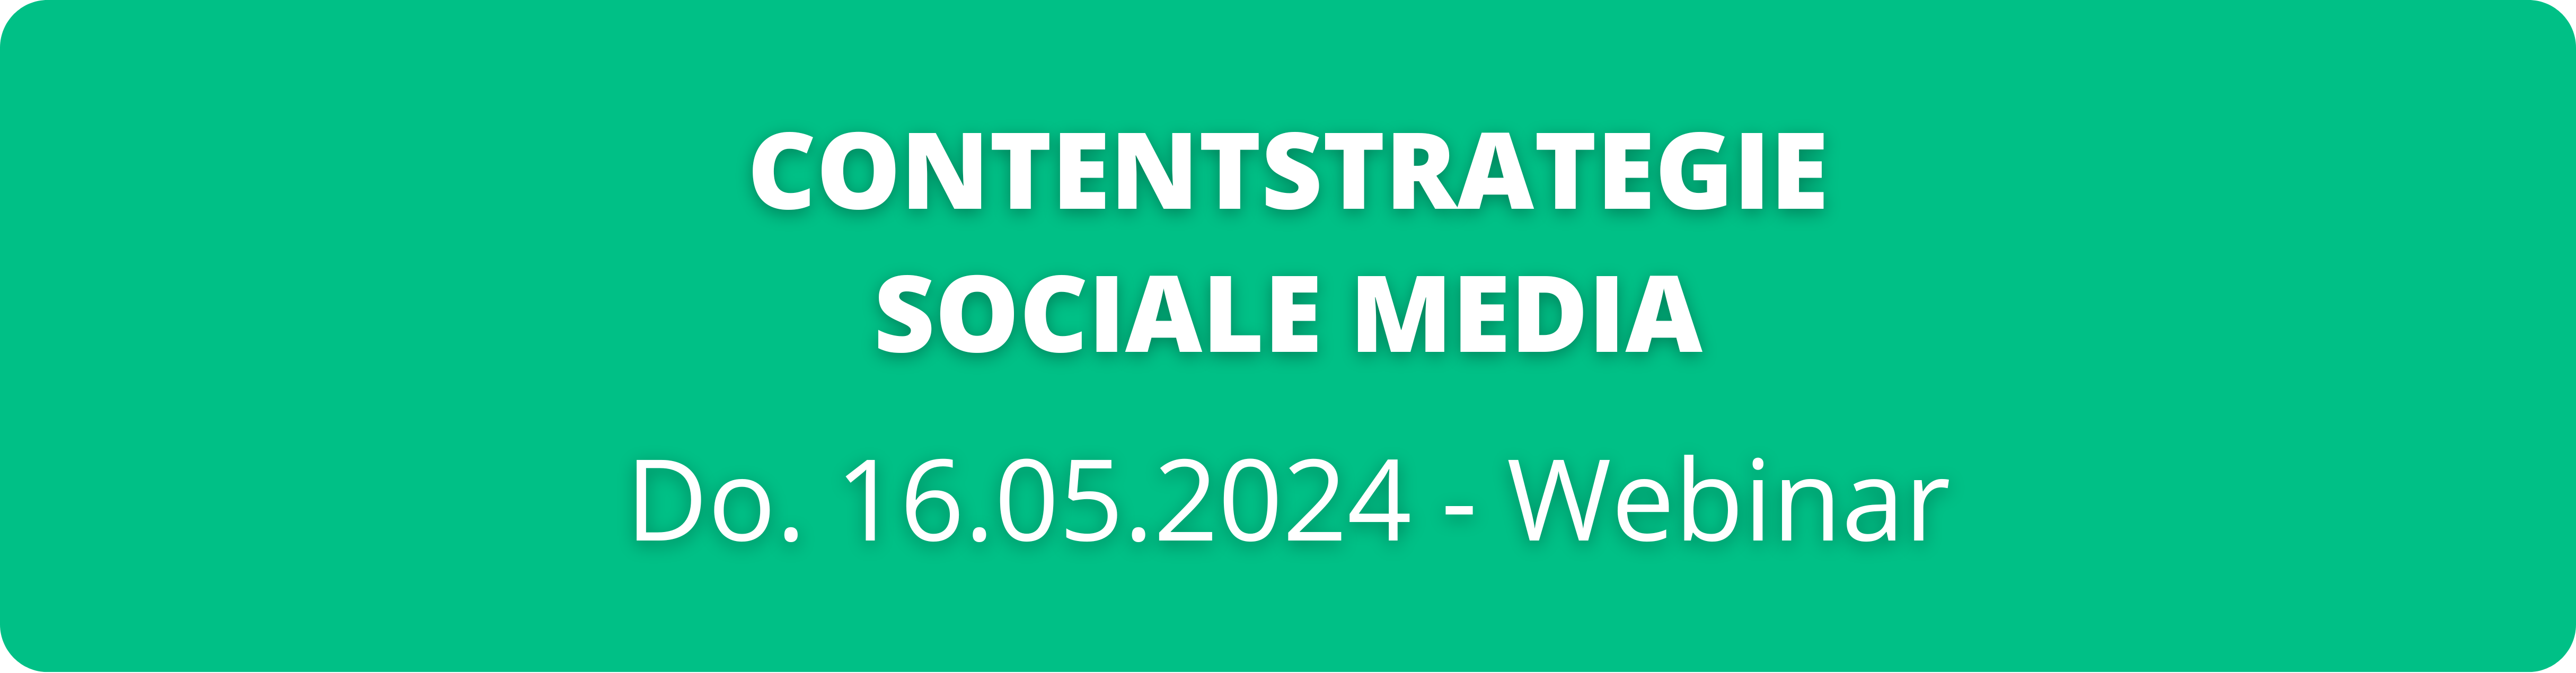 Webinar Contentstrategie sociale media